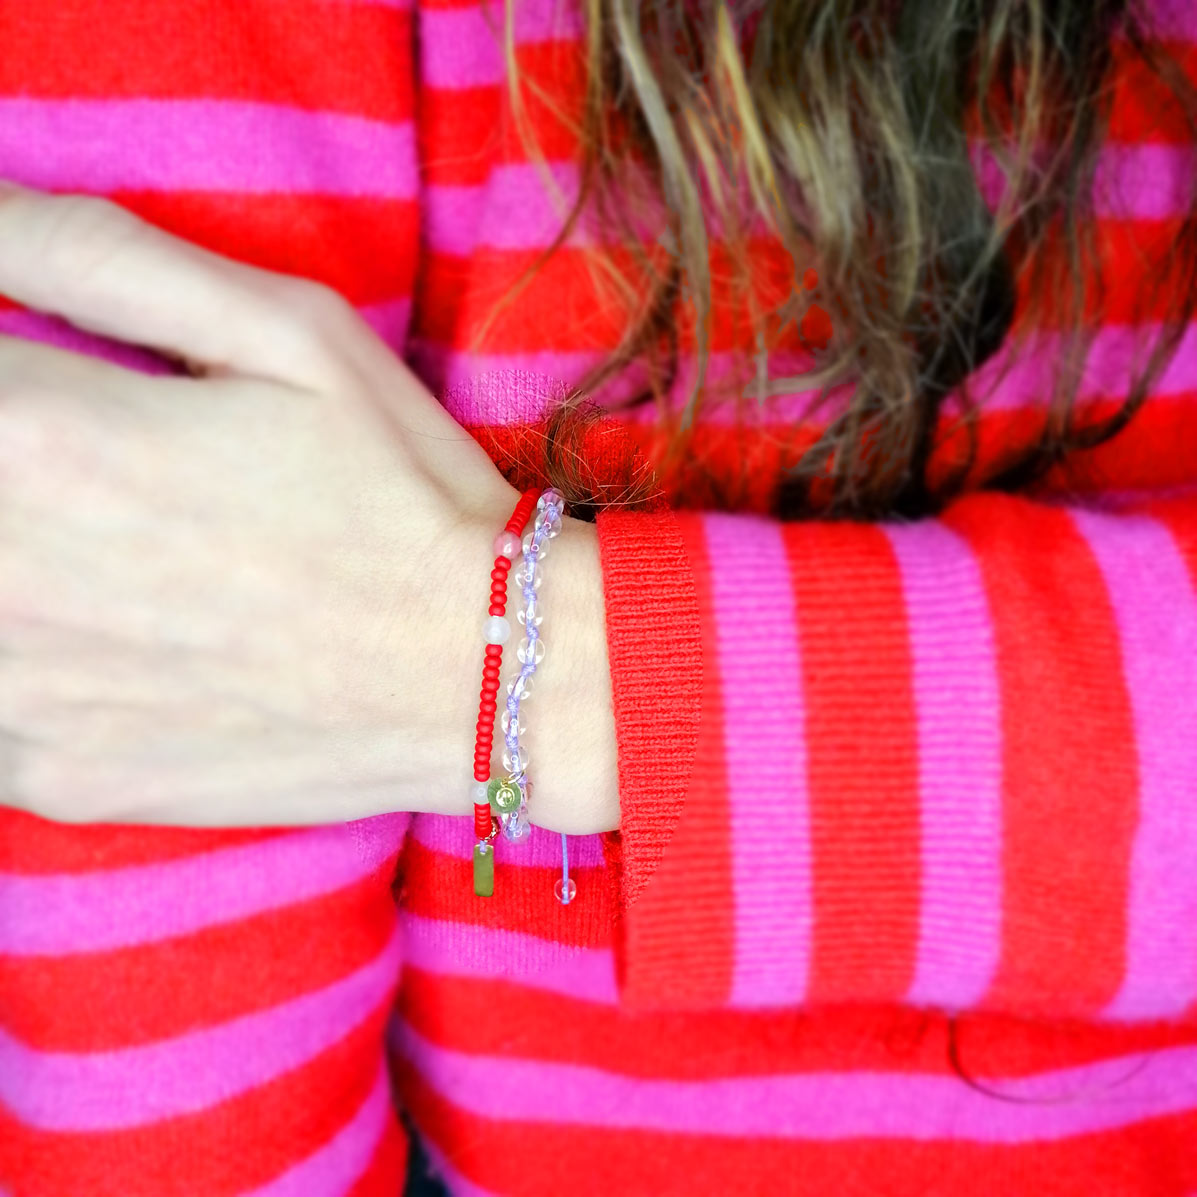 Edelstein Armband in lila mit Smiley Charm und rotes Perlenarmband | pia norden